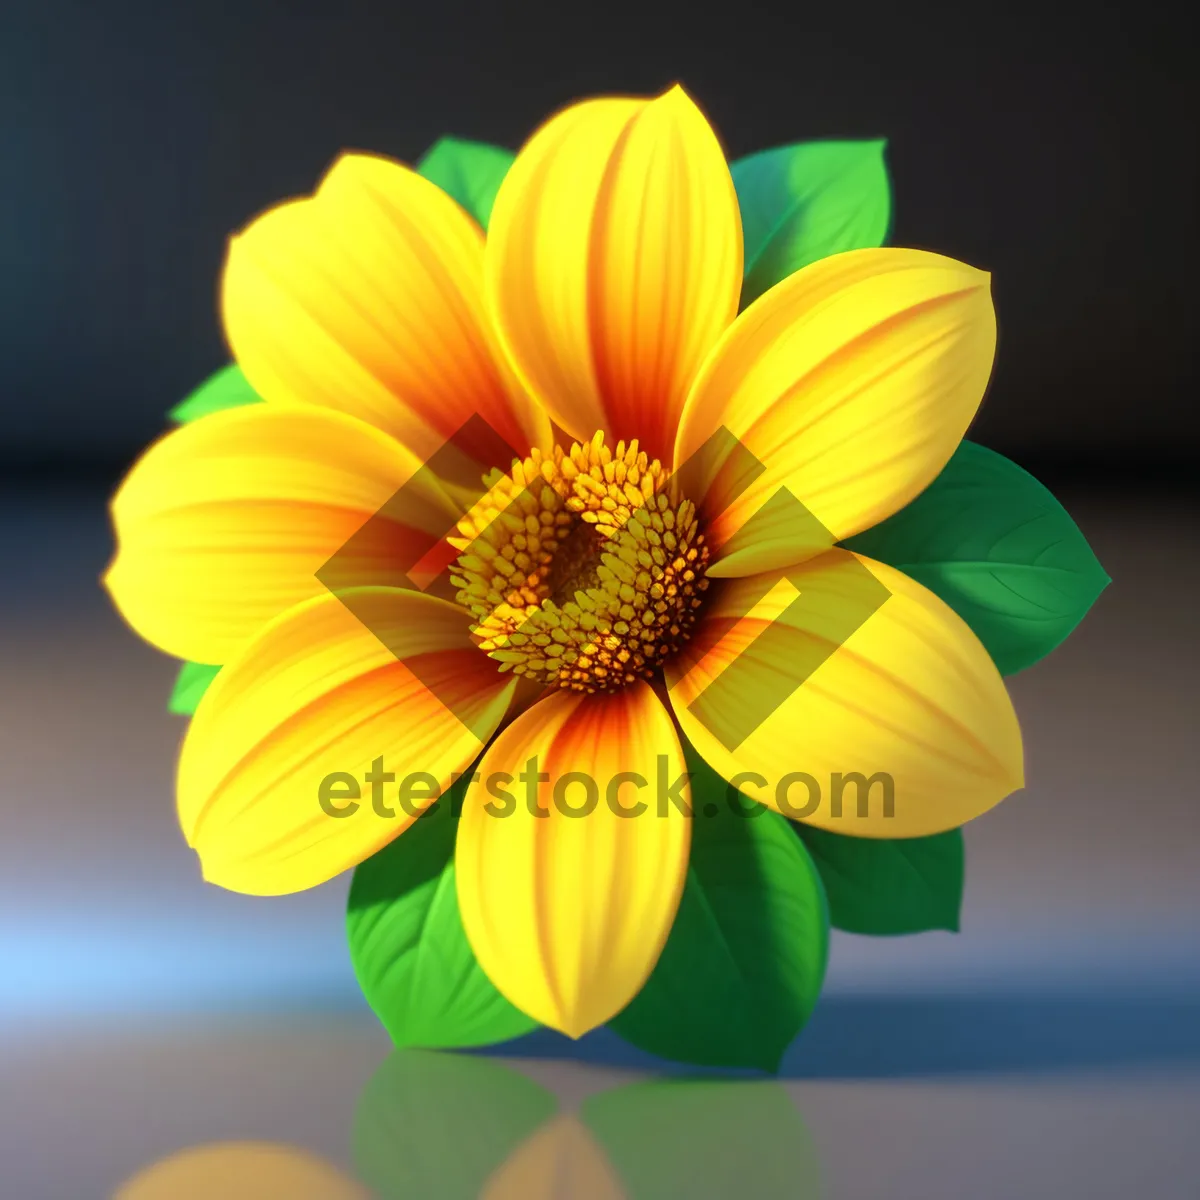 Picture of Vibrant Sunflower Blossom in Full Bloom